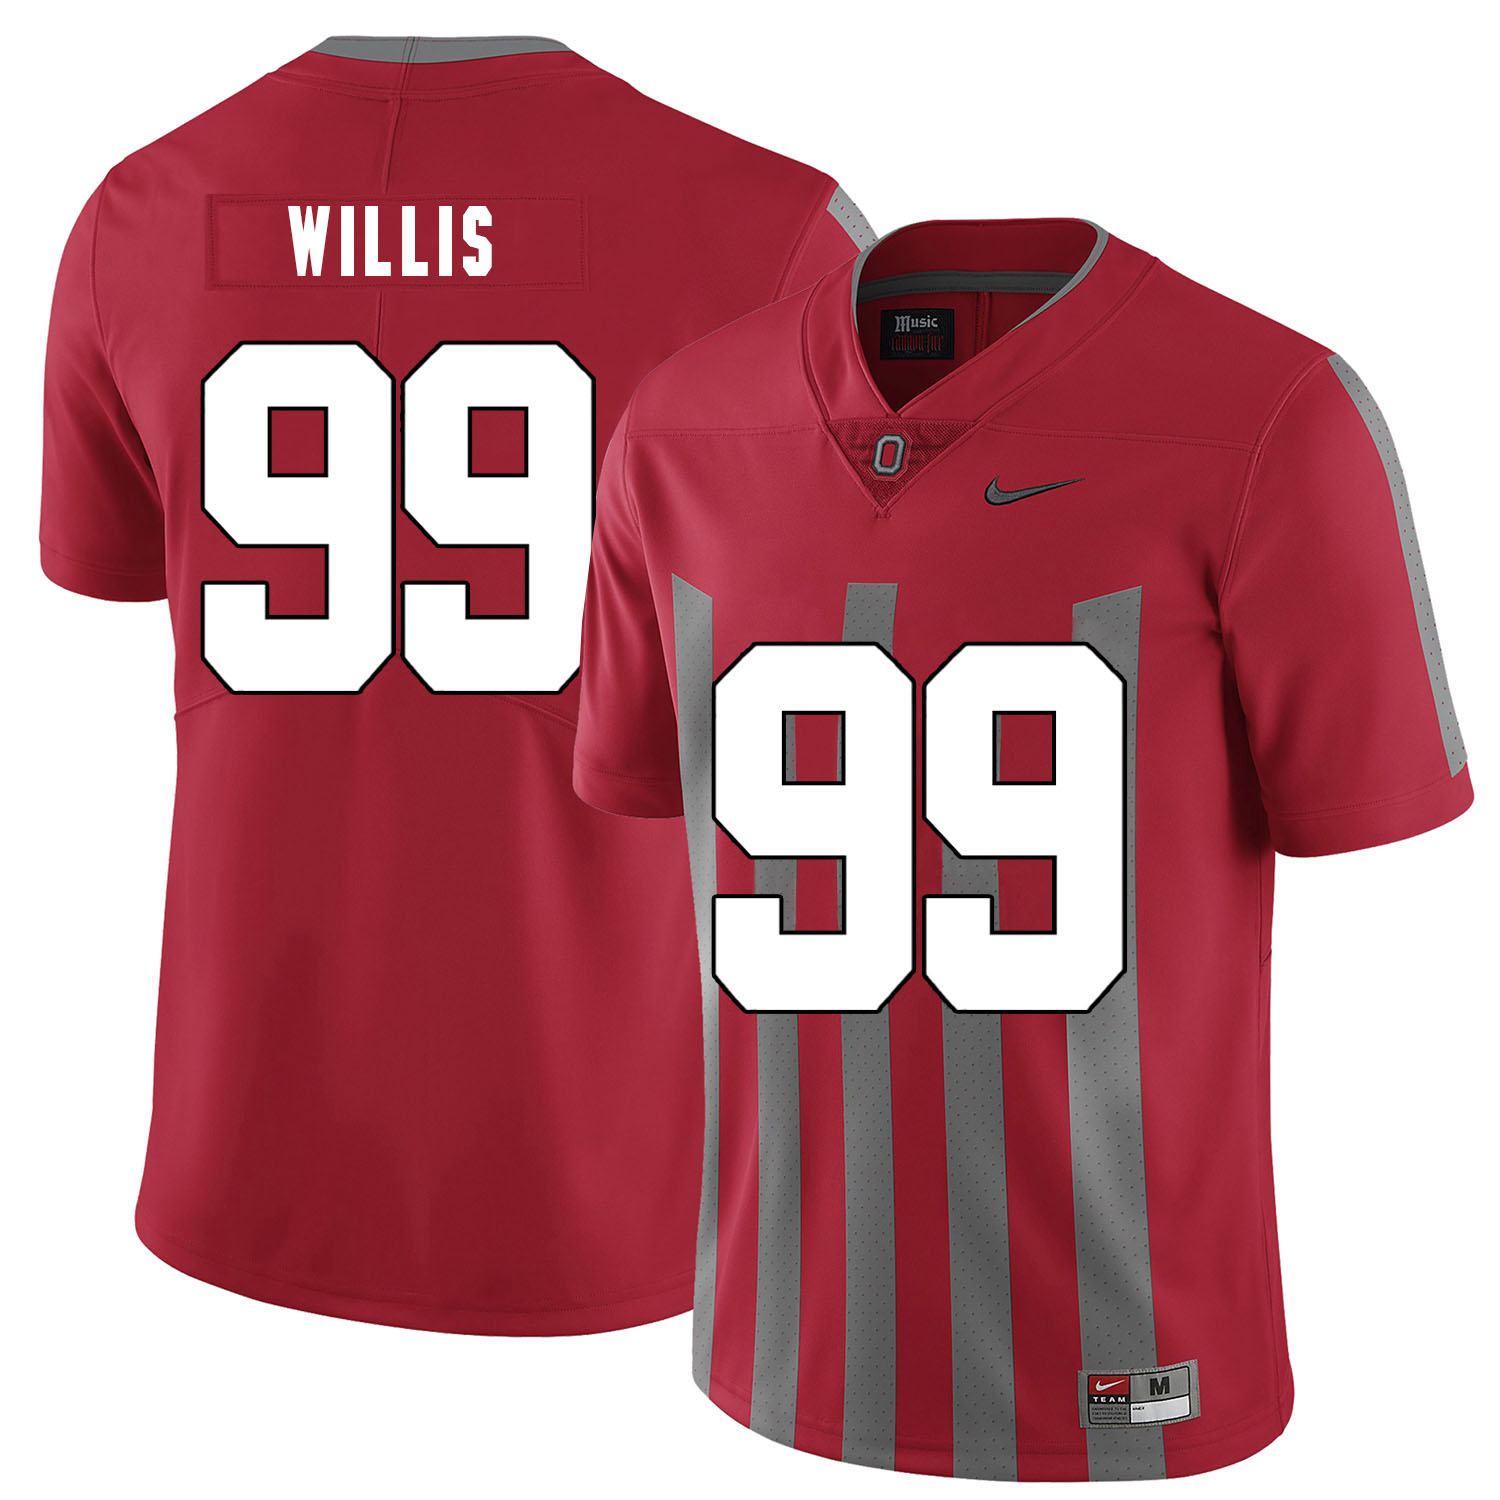 Ohio State Buckeyes 99 Bill Willis Red Elite Nike College Football Jersey